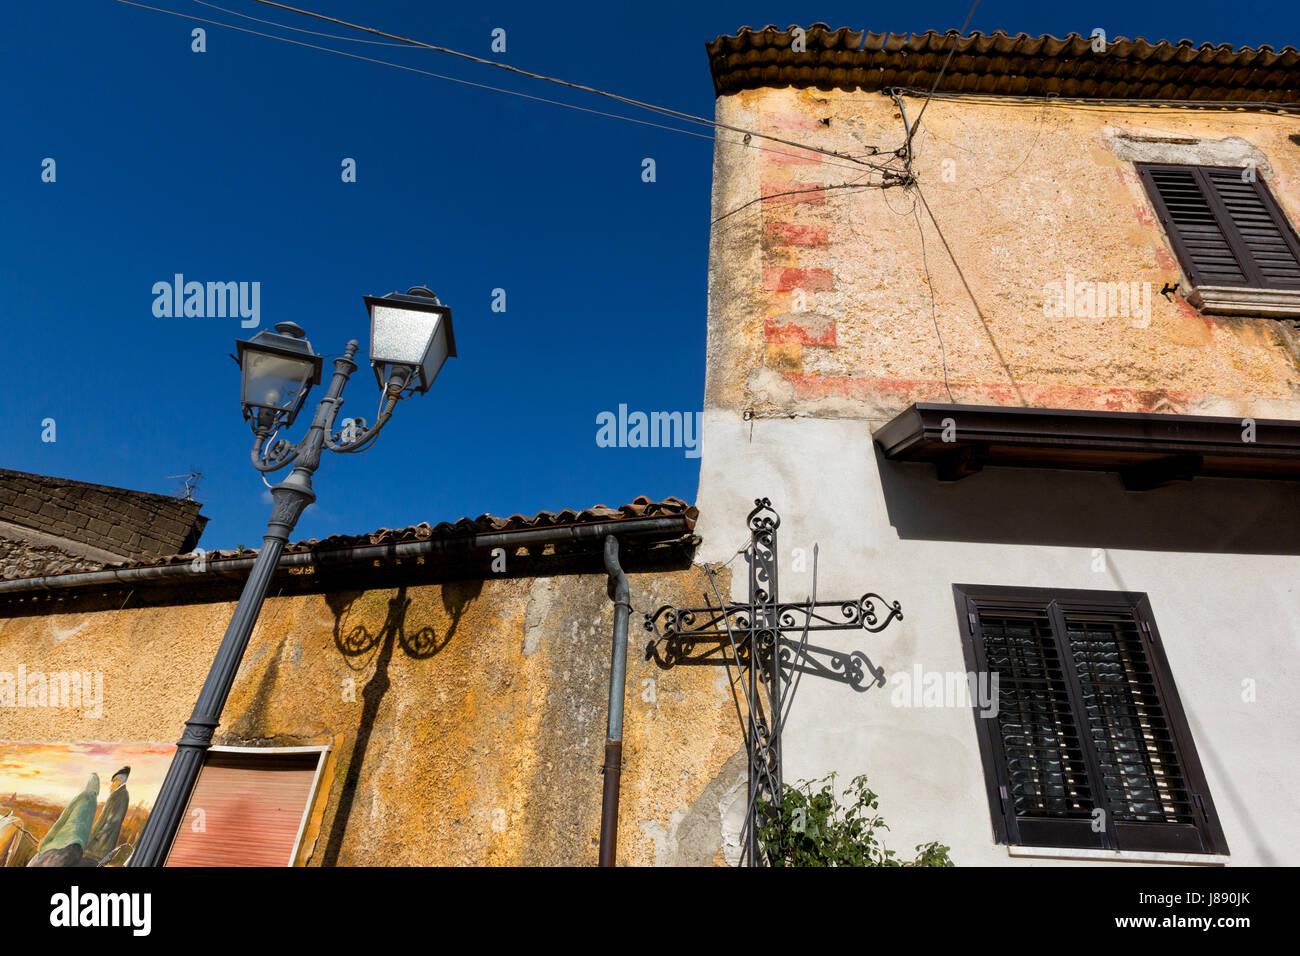 Cervinara (Avellino) - The old city centre Stock Photo